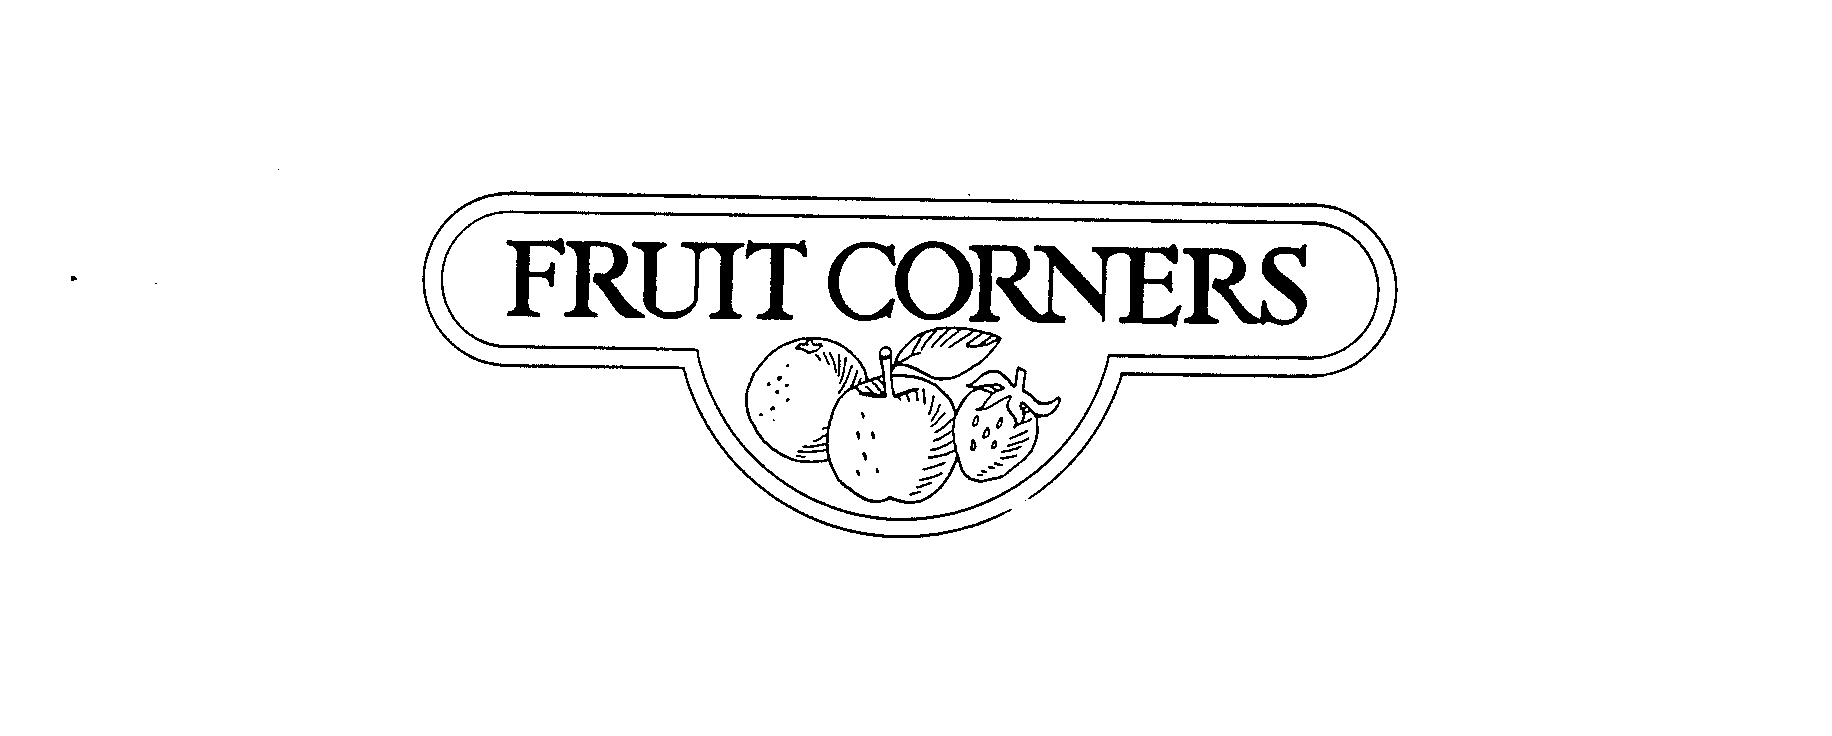  FRUIT CORNERS